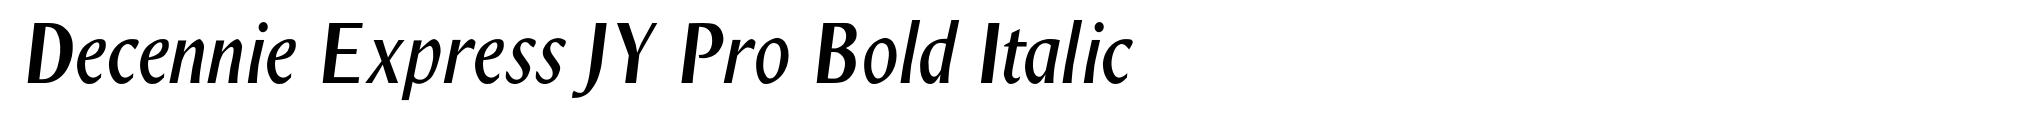 Decennie Express JY Pro Bold Italic image